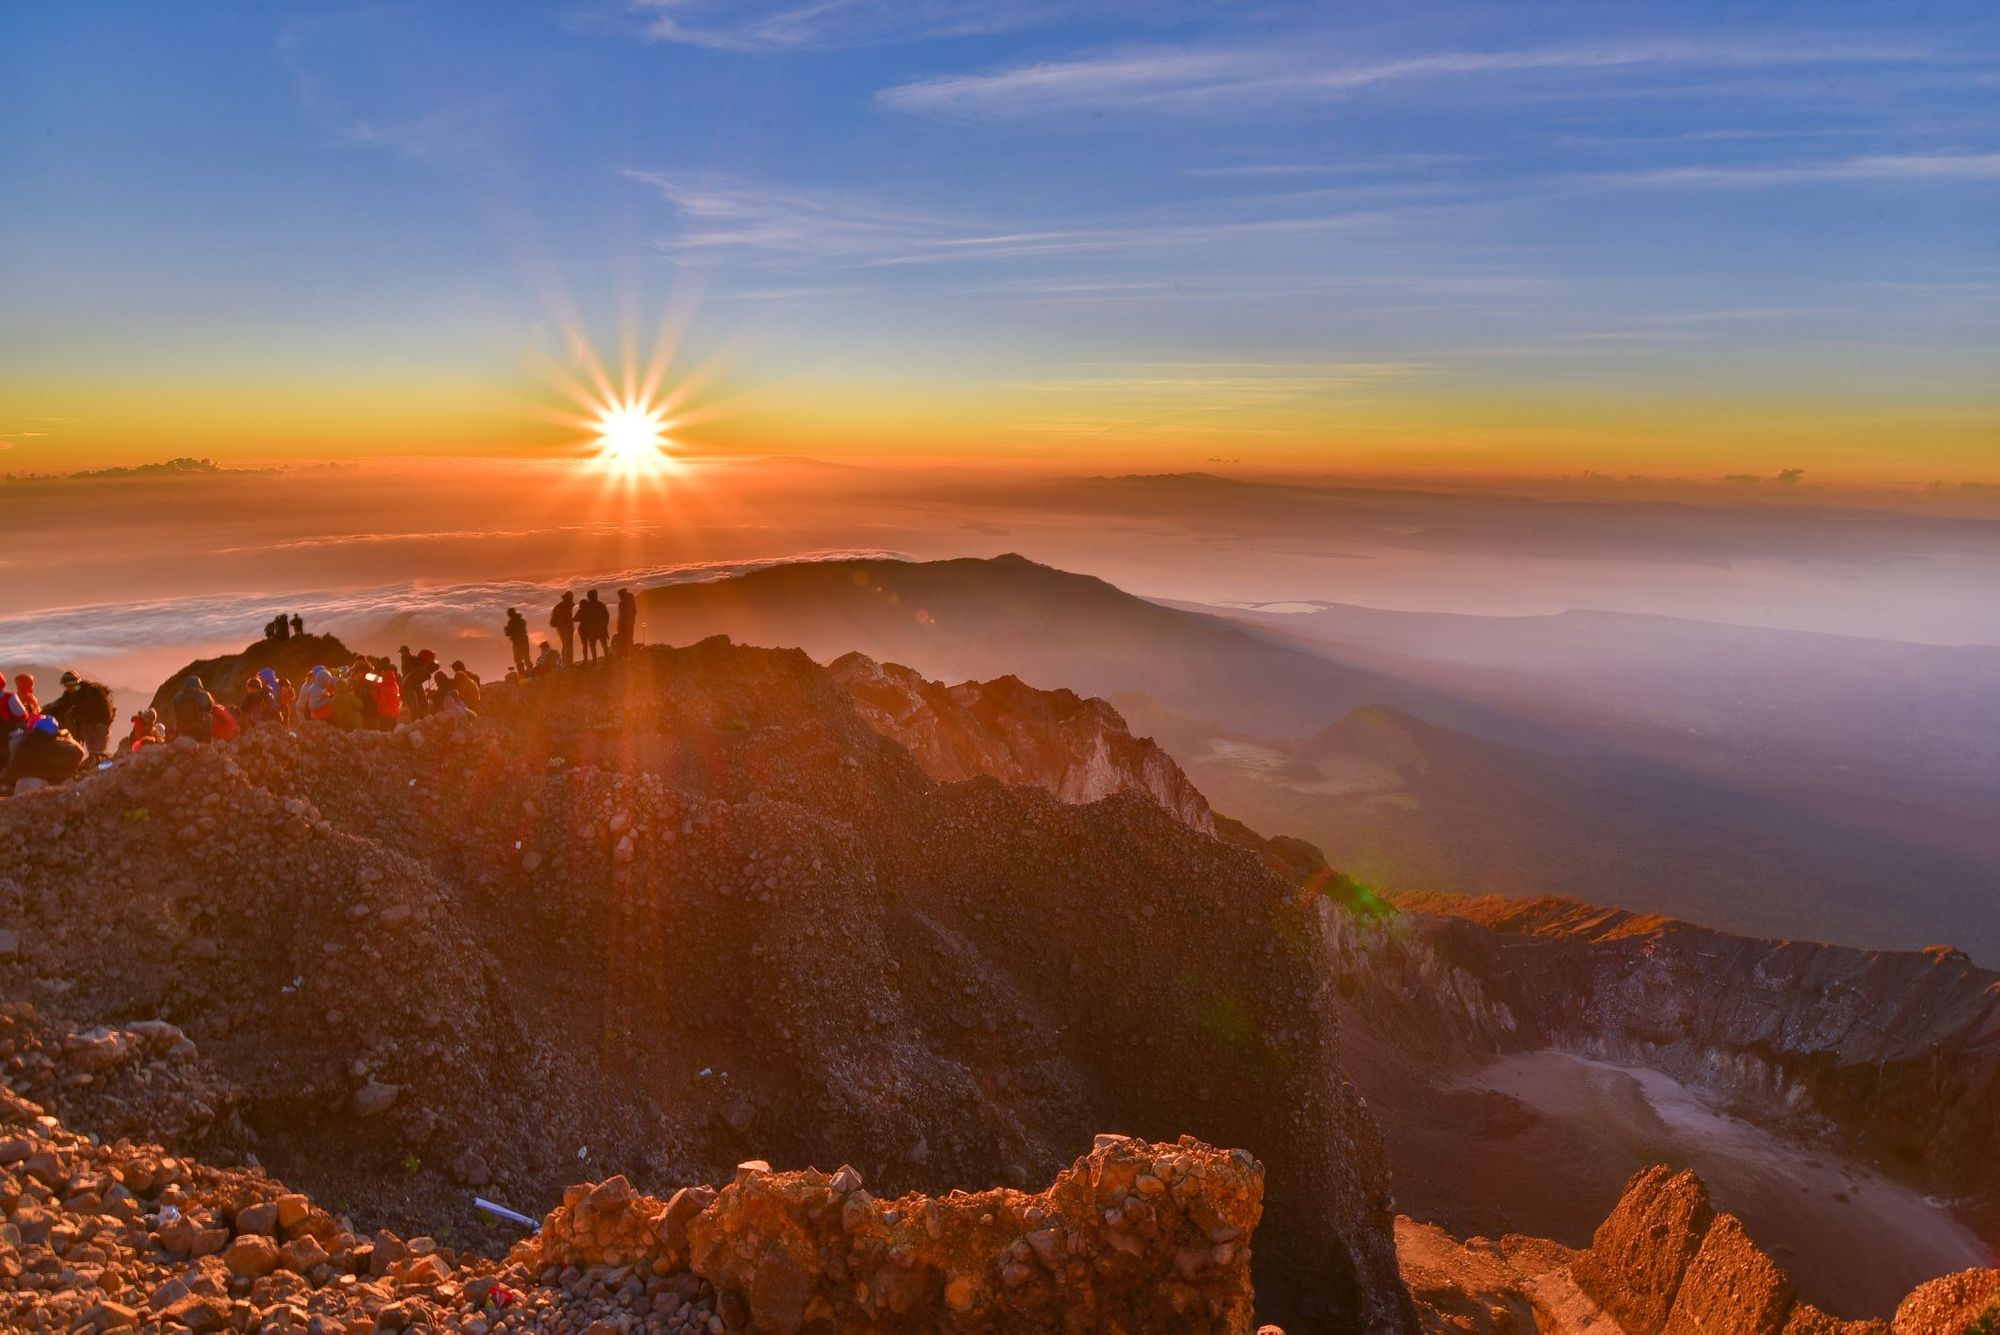 Climbers watch sunrise on the summit of Mount Rinjani, Indonesia